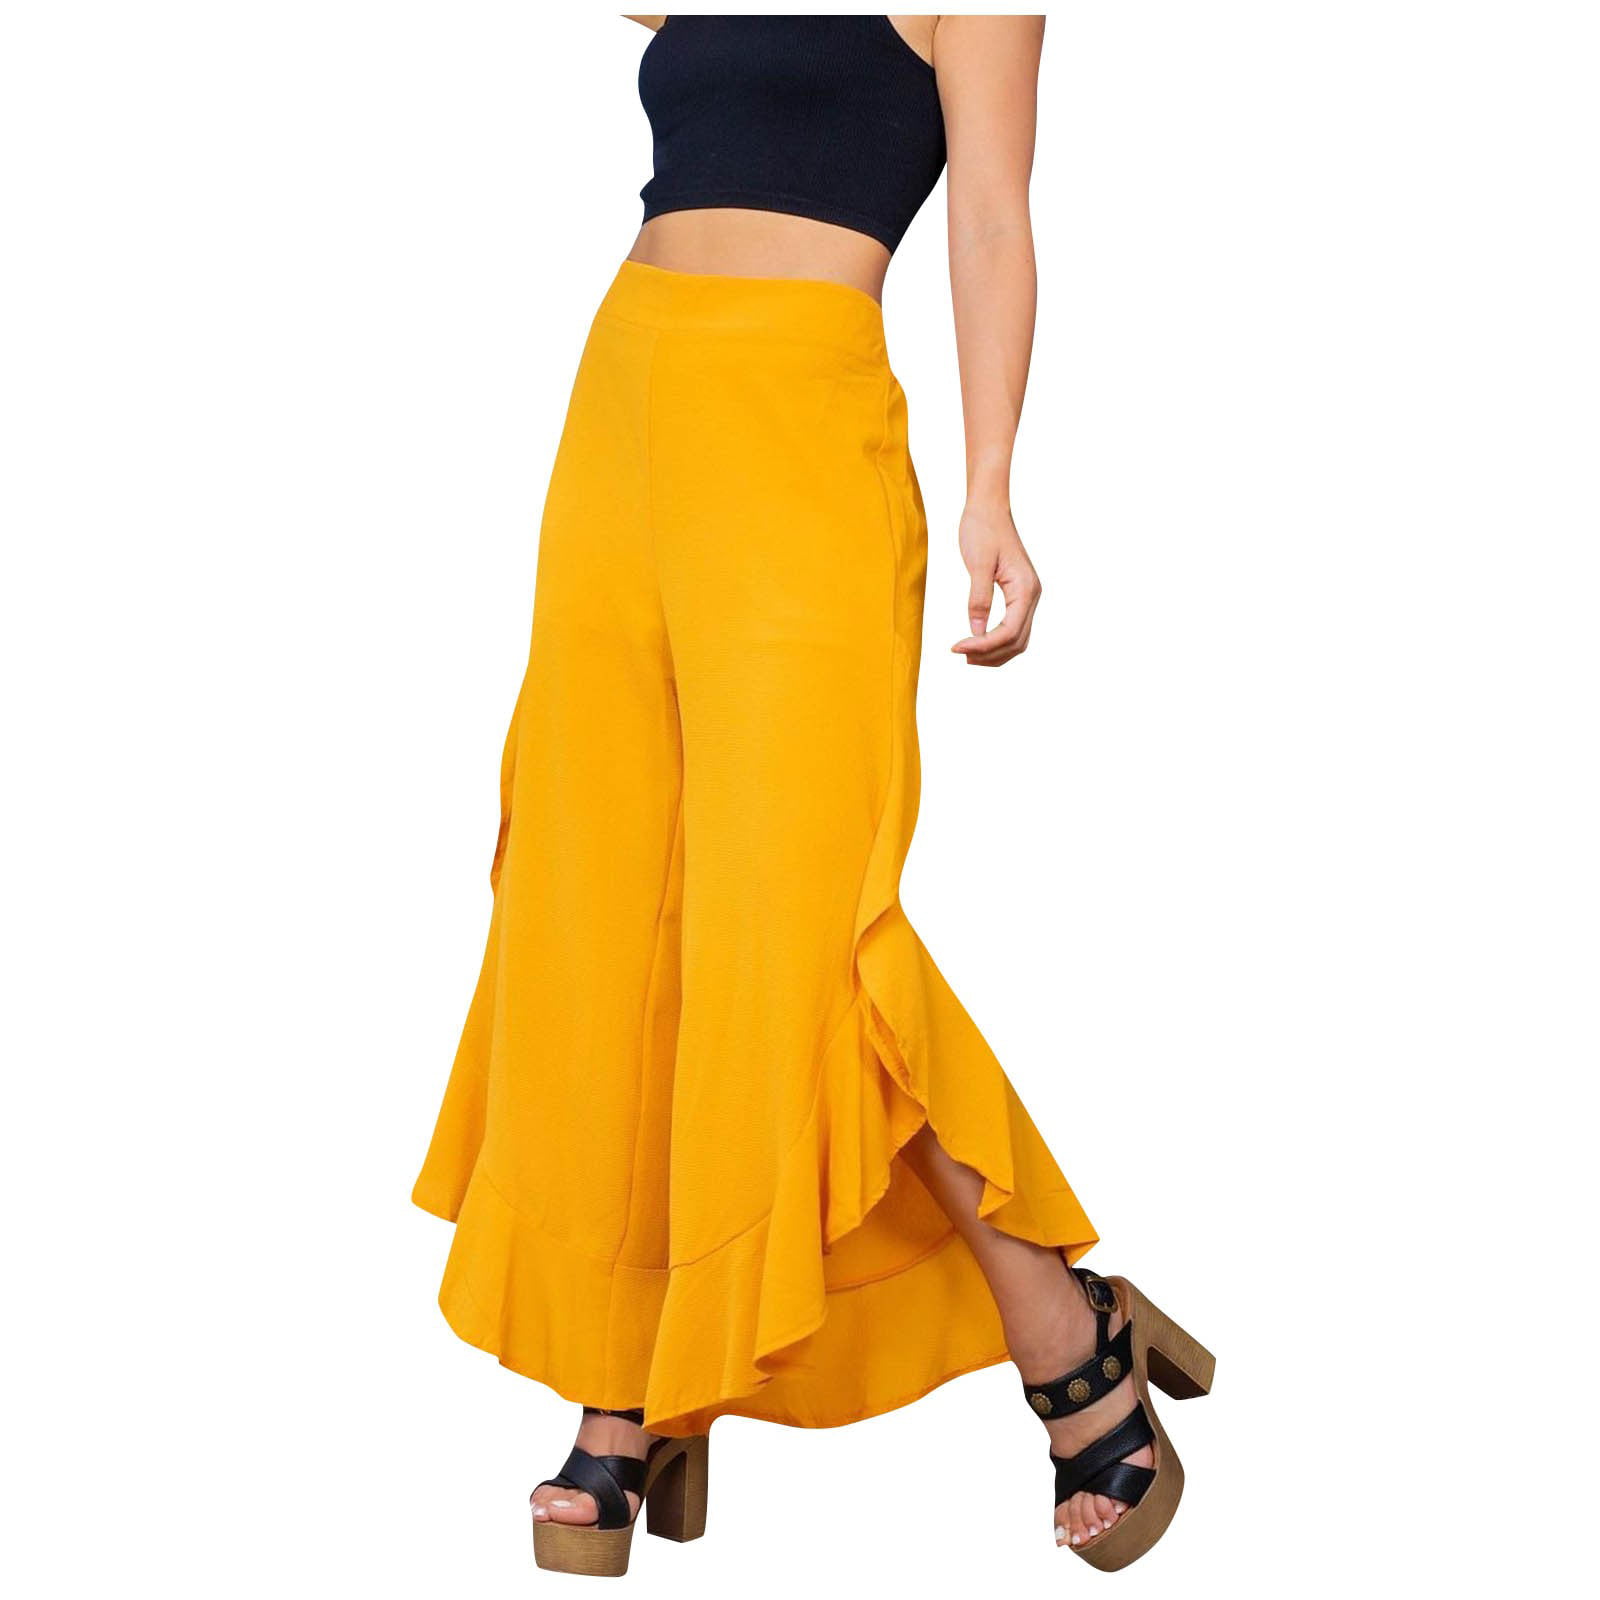 ZXHACSJ Women's Fashion Solid Color Ruffle Irregular Open Trousers Elastic  Band Wide Leg Pants Yellow L